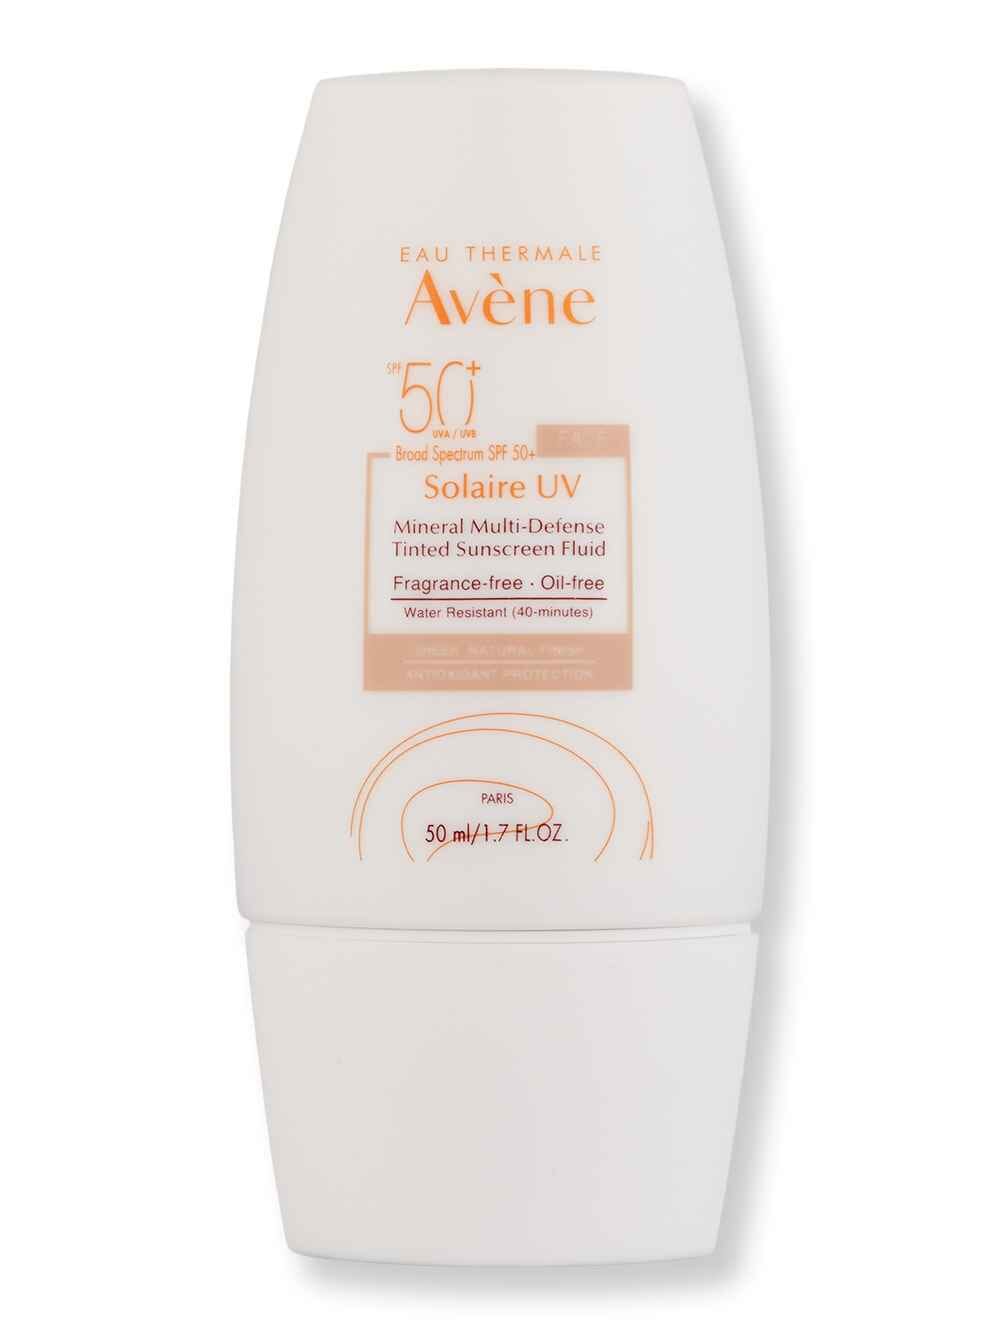 Avene Avene Solaire UV Mineral Multi-Defense Tinted Sunscreen SPF 50+ 1.7 fl oz50 ml Face Sunscreens 